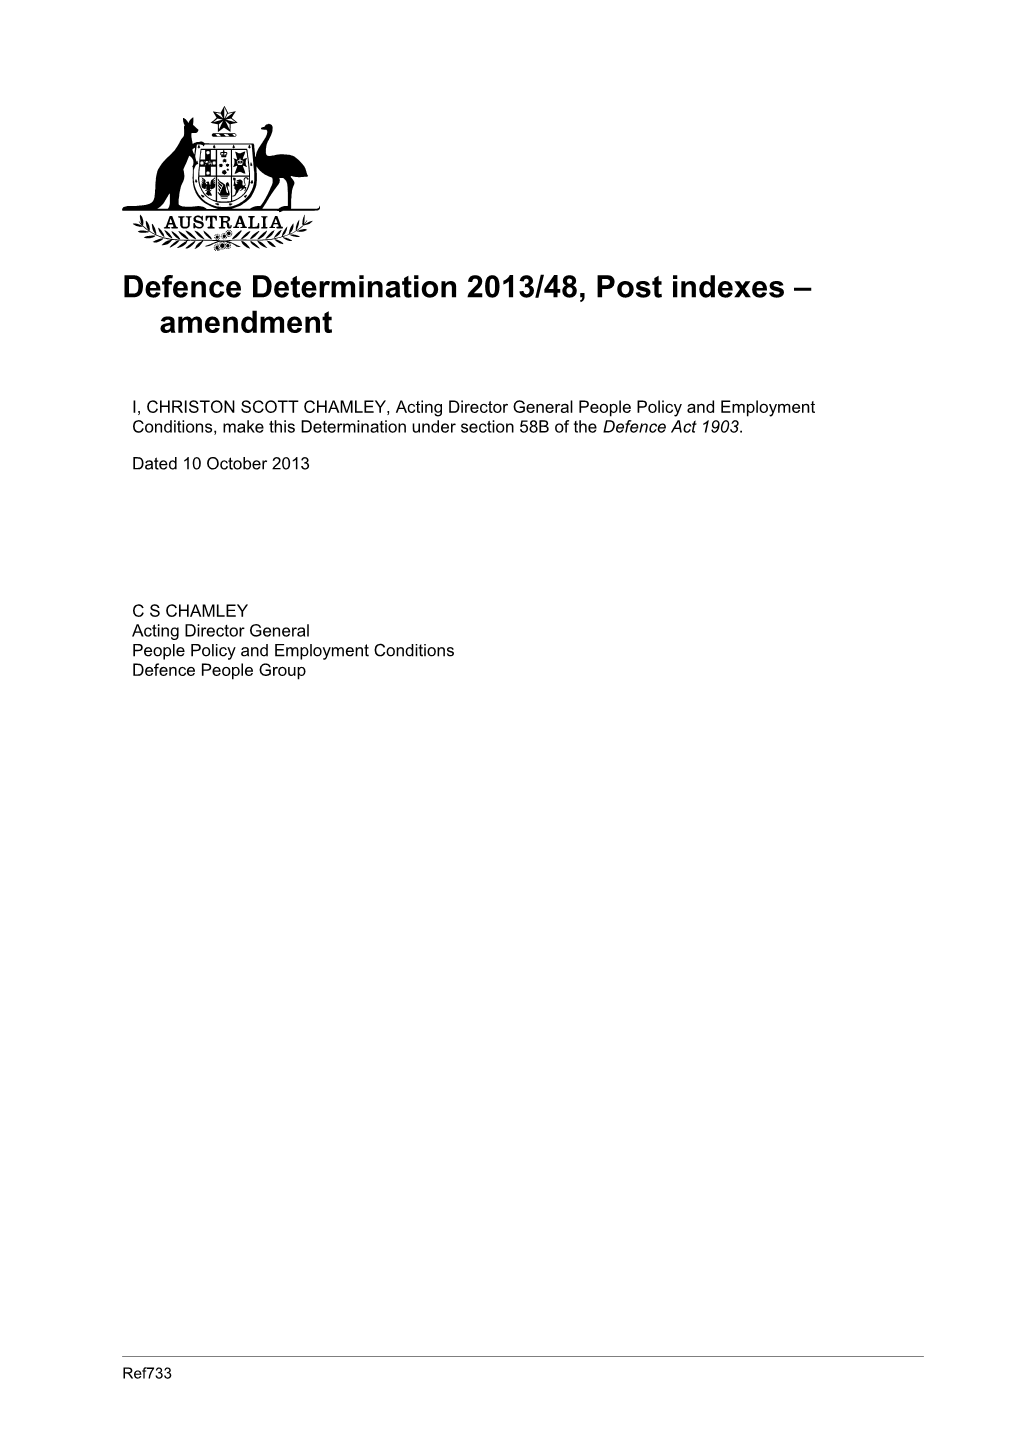 Defence Determination 2013/48, Post Indexes Amendment